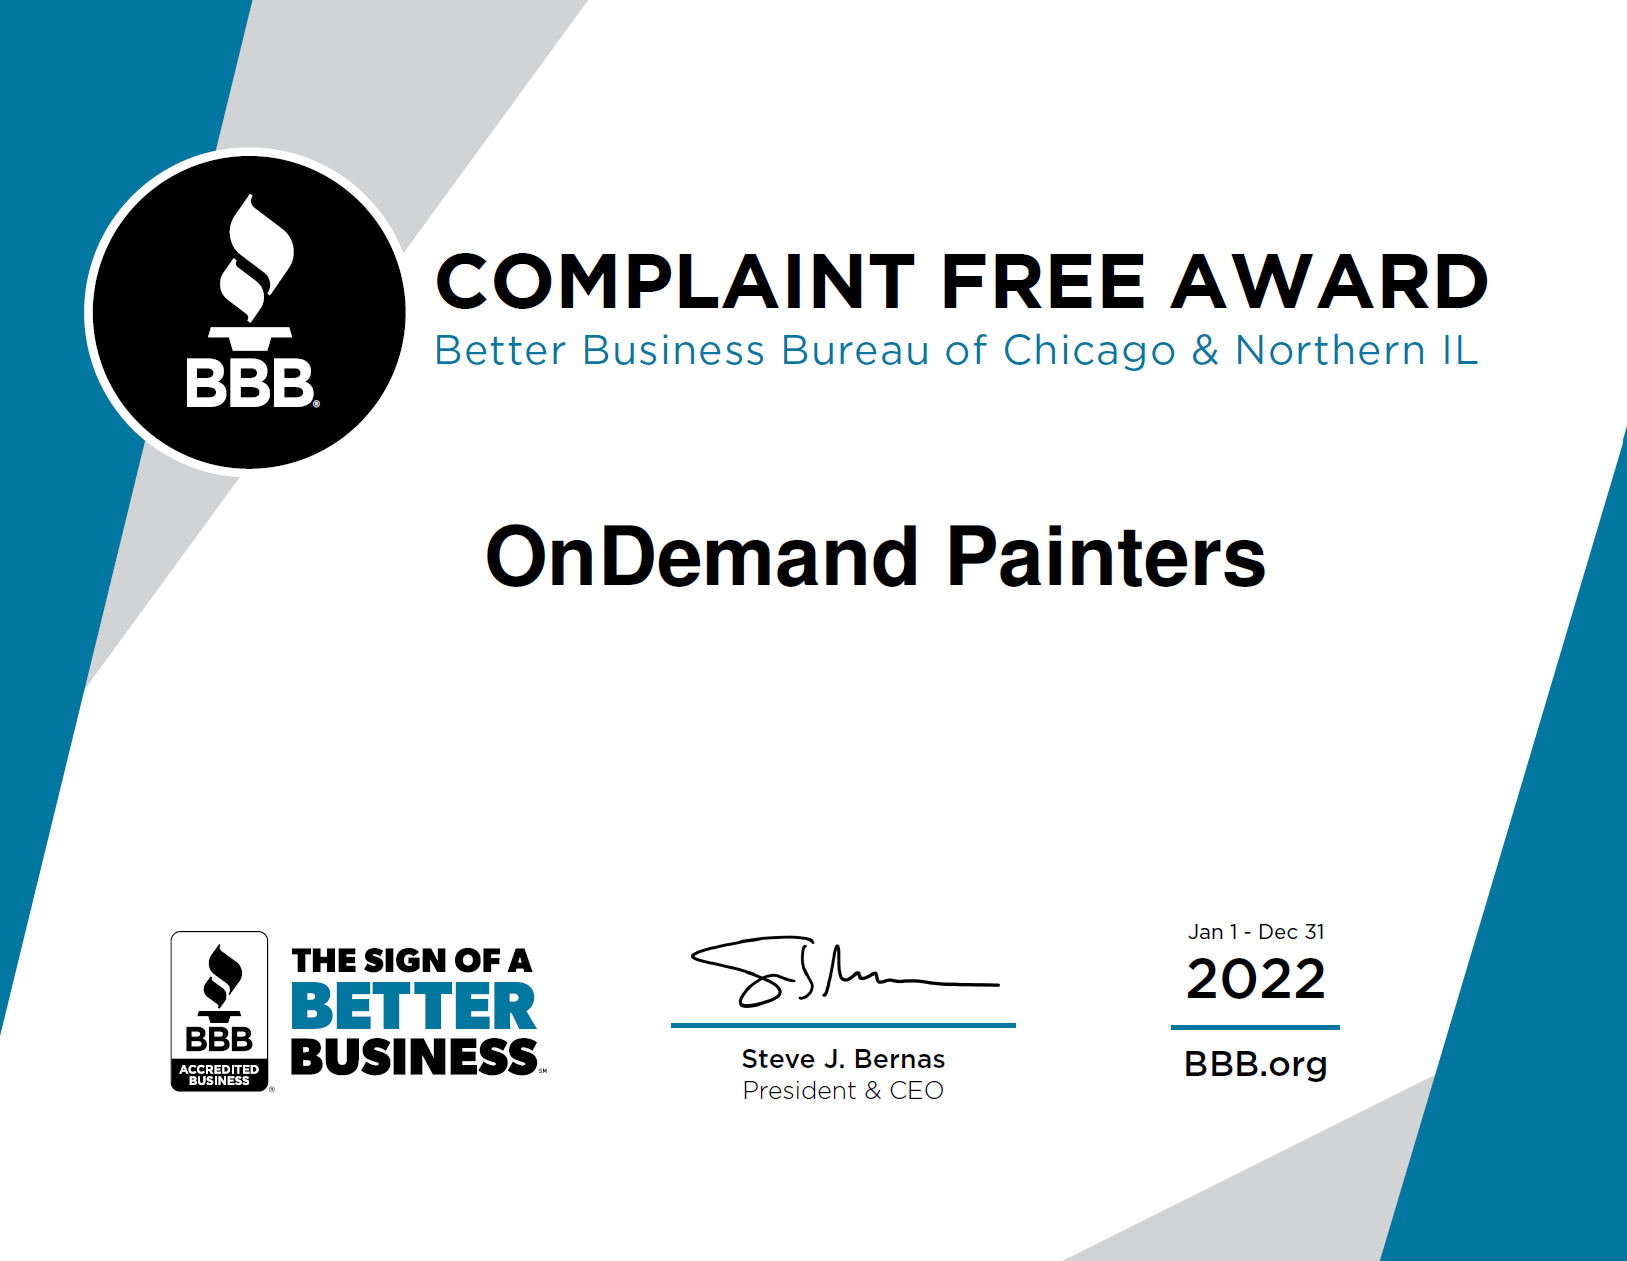 Complaint Free Award